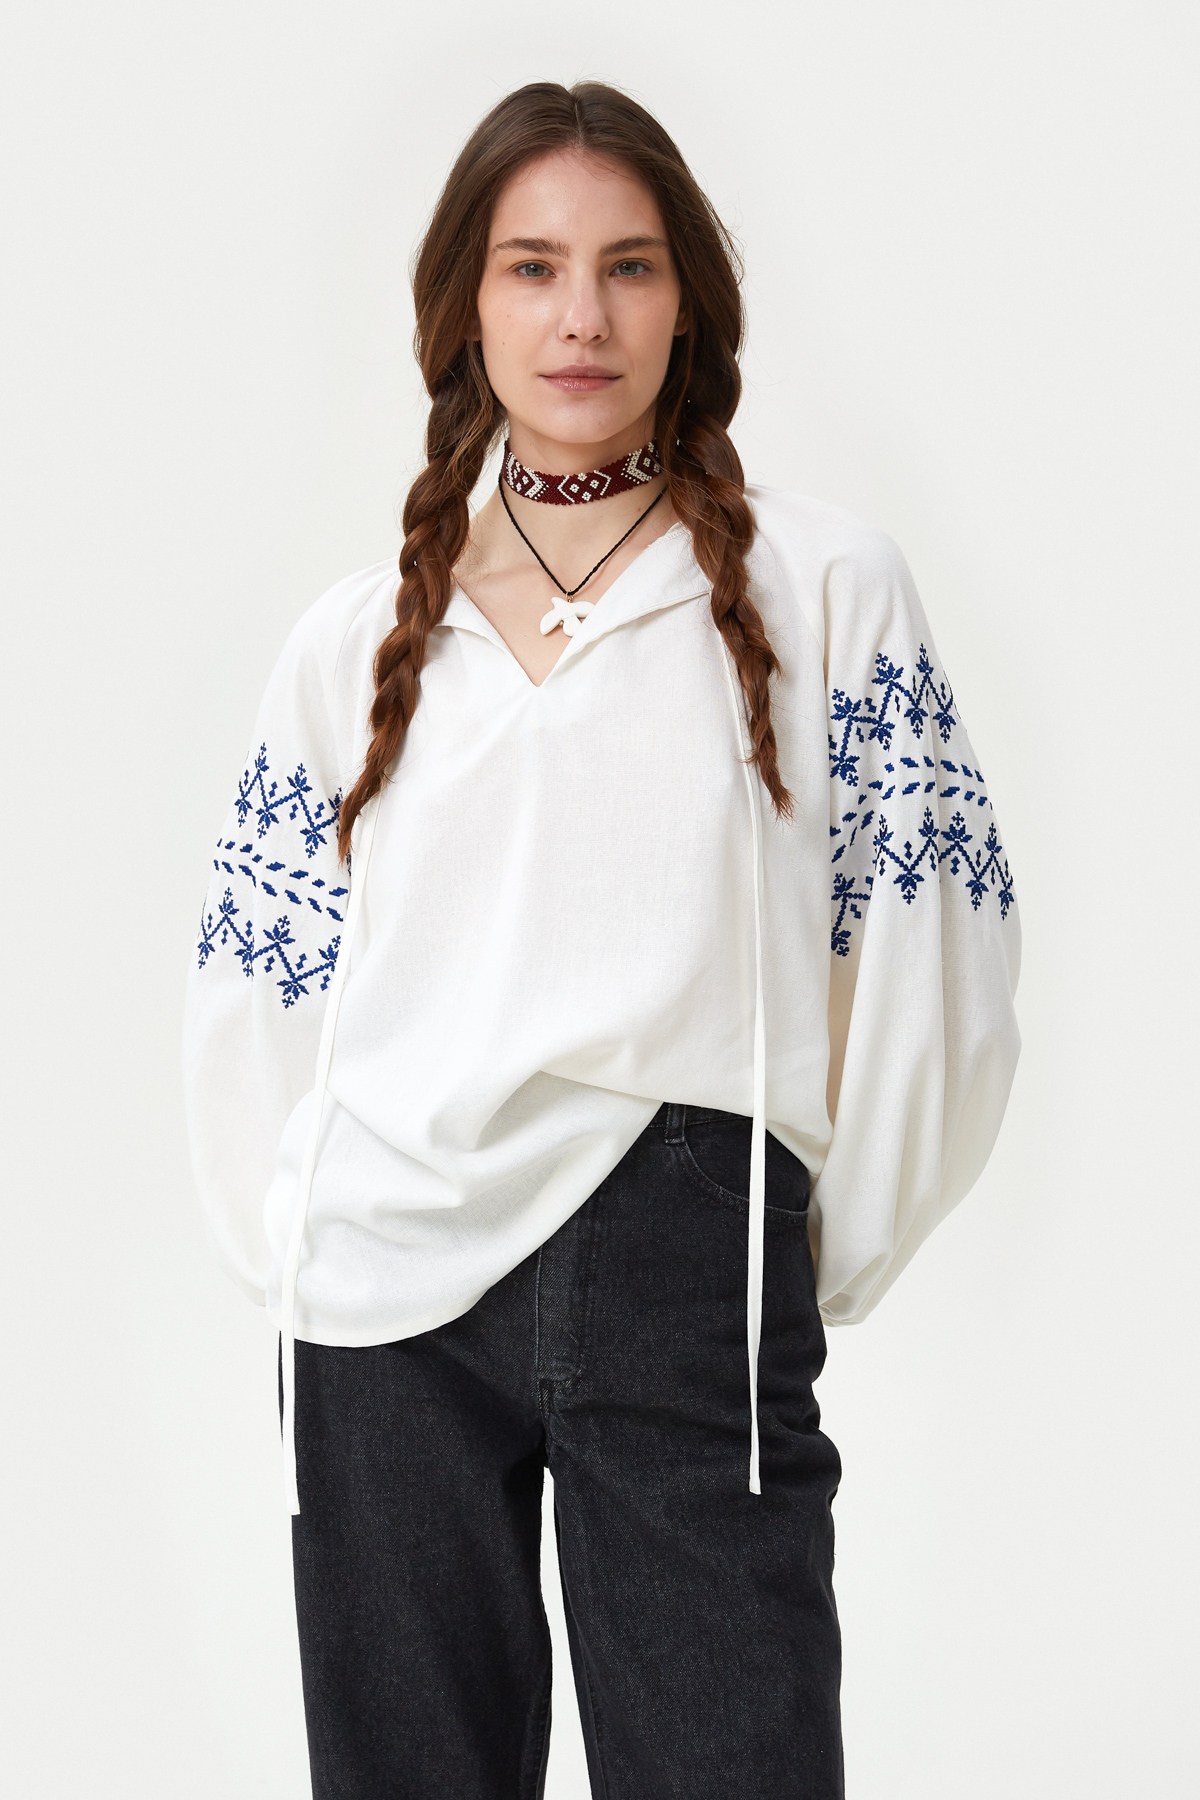 Milky linen vyshyvanka shirt with zigzags embroidery, photo 1